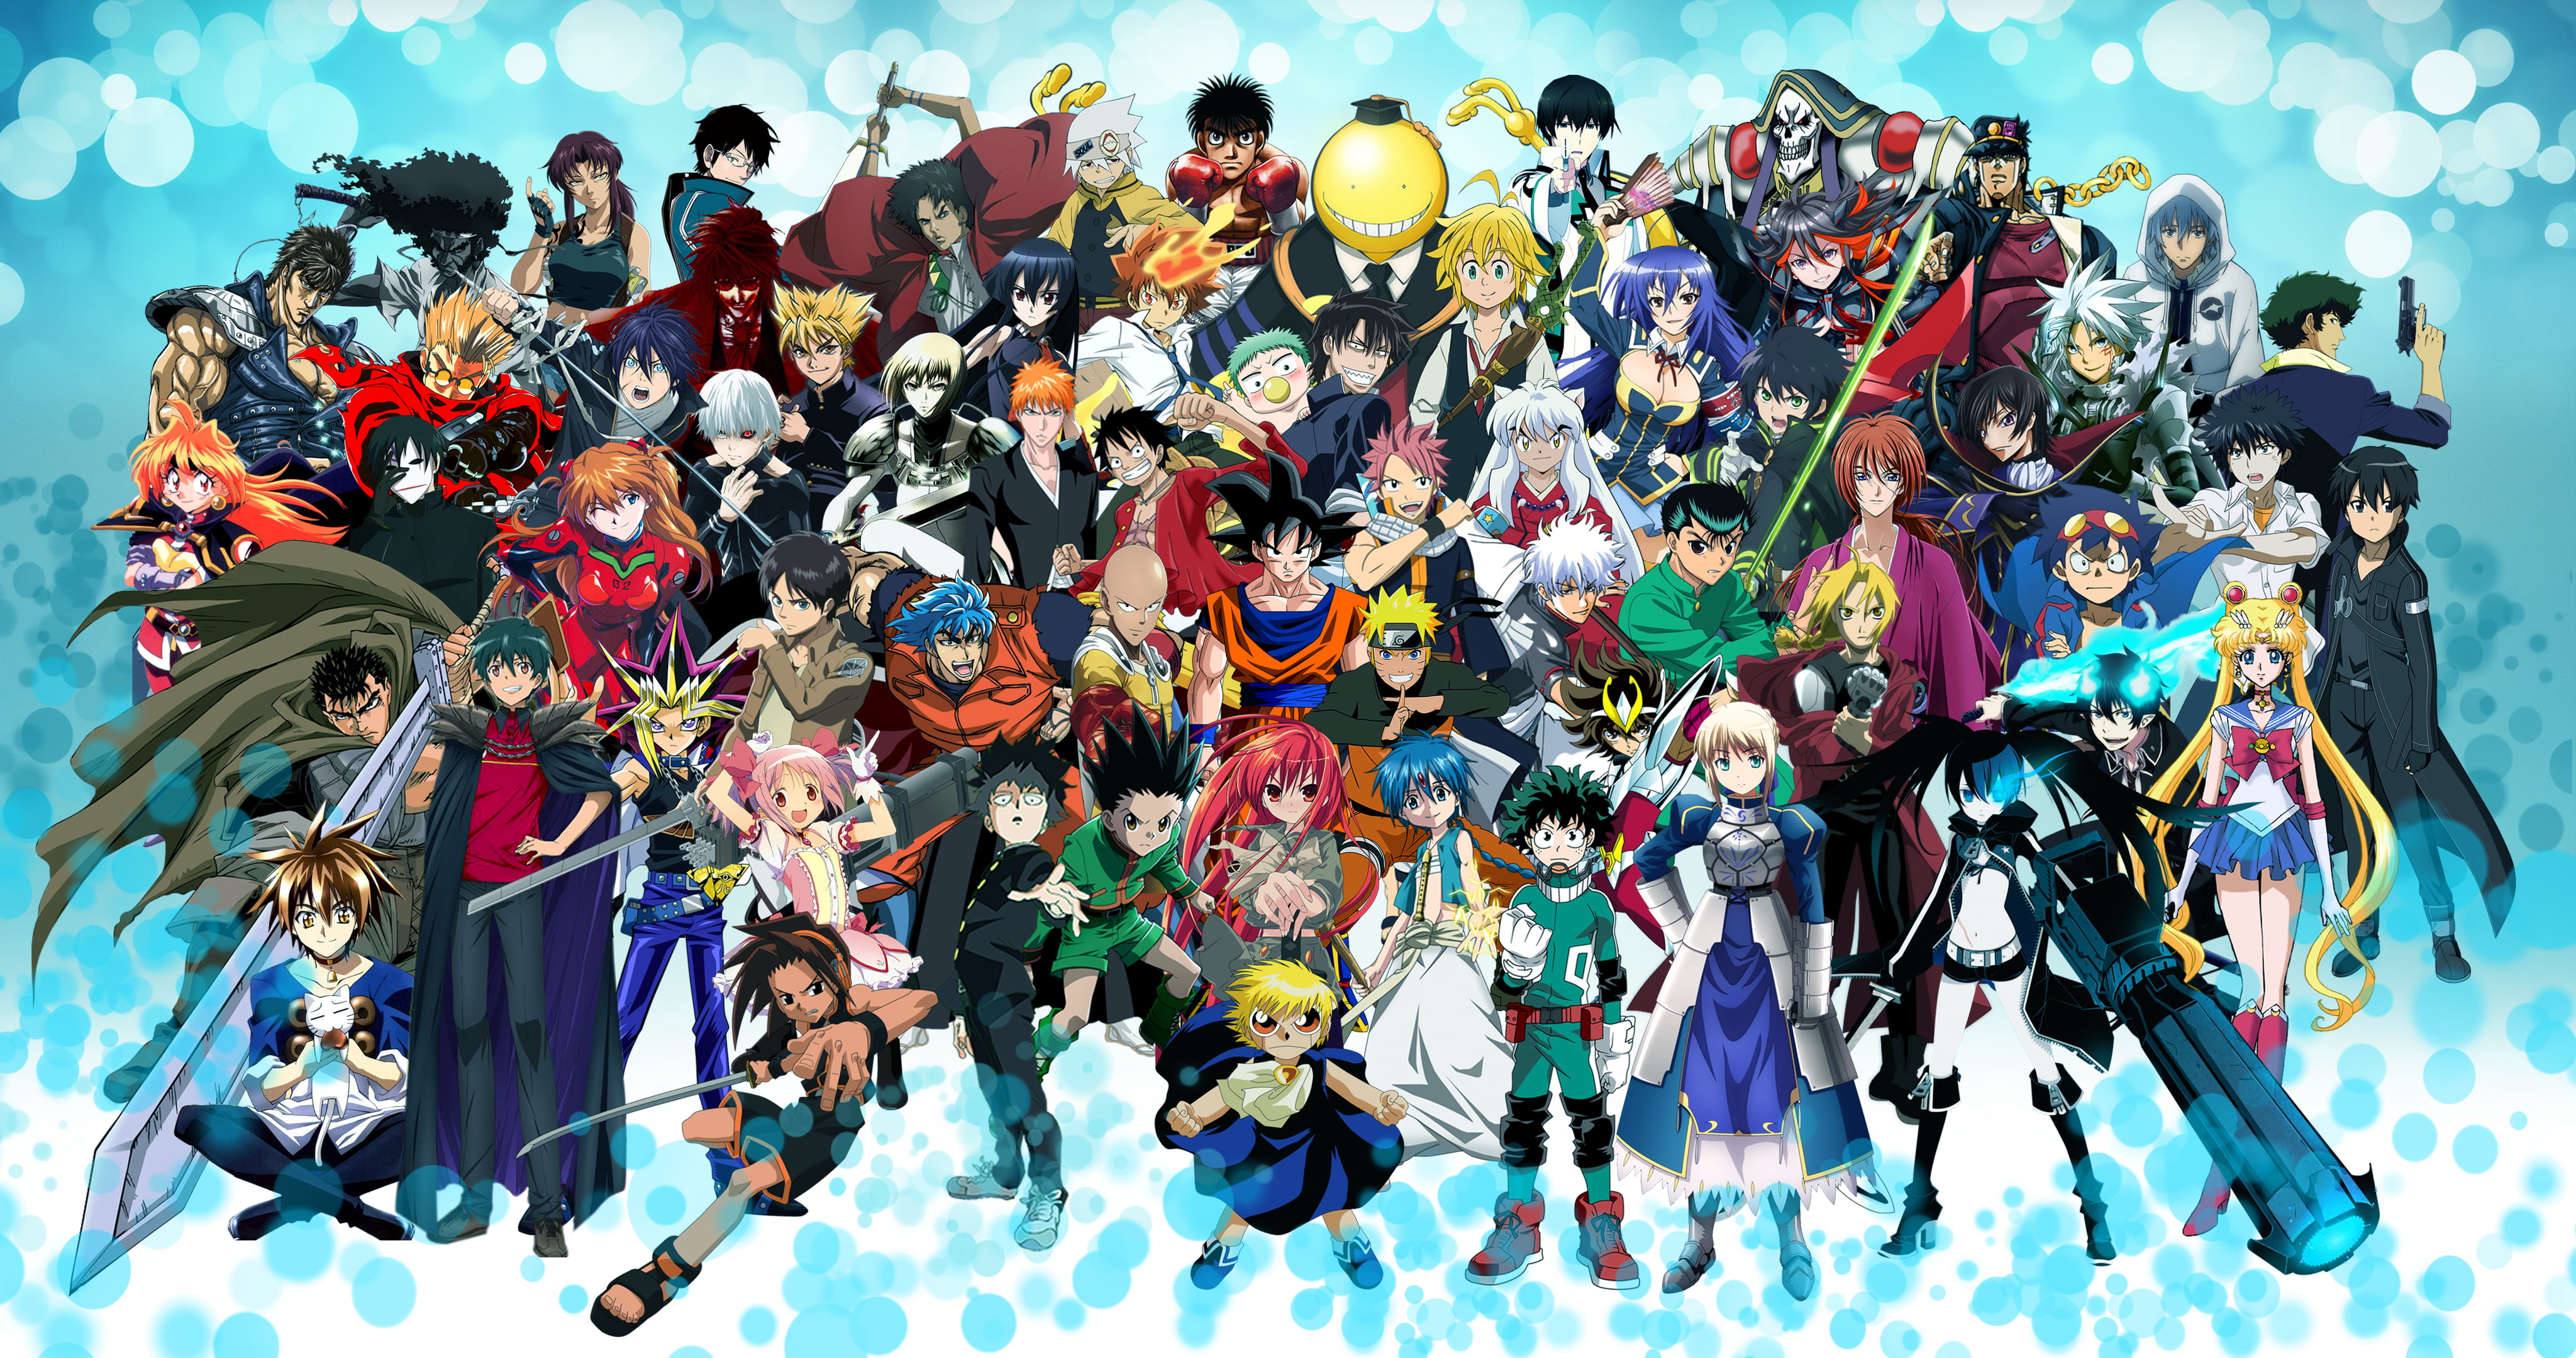 Liste De Tous Les Animes Japonais Free download All Anime Characters Wallpaper Hd 4096x2160 Wallpaper